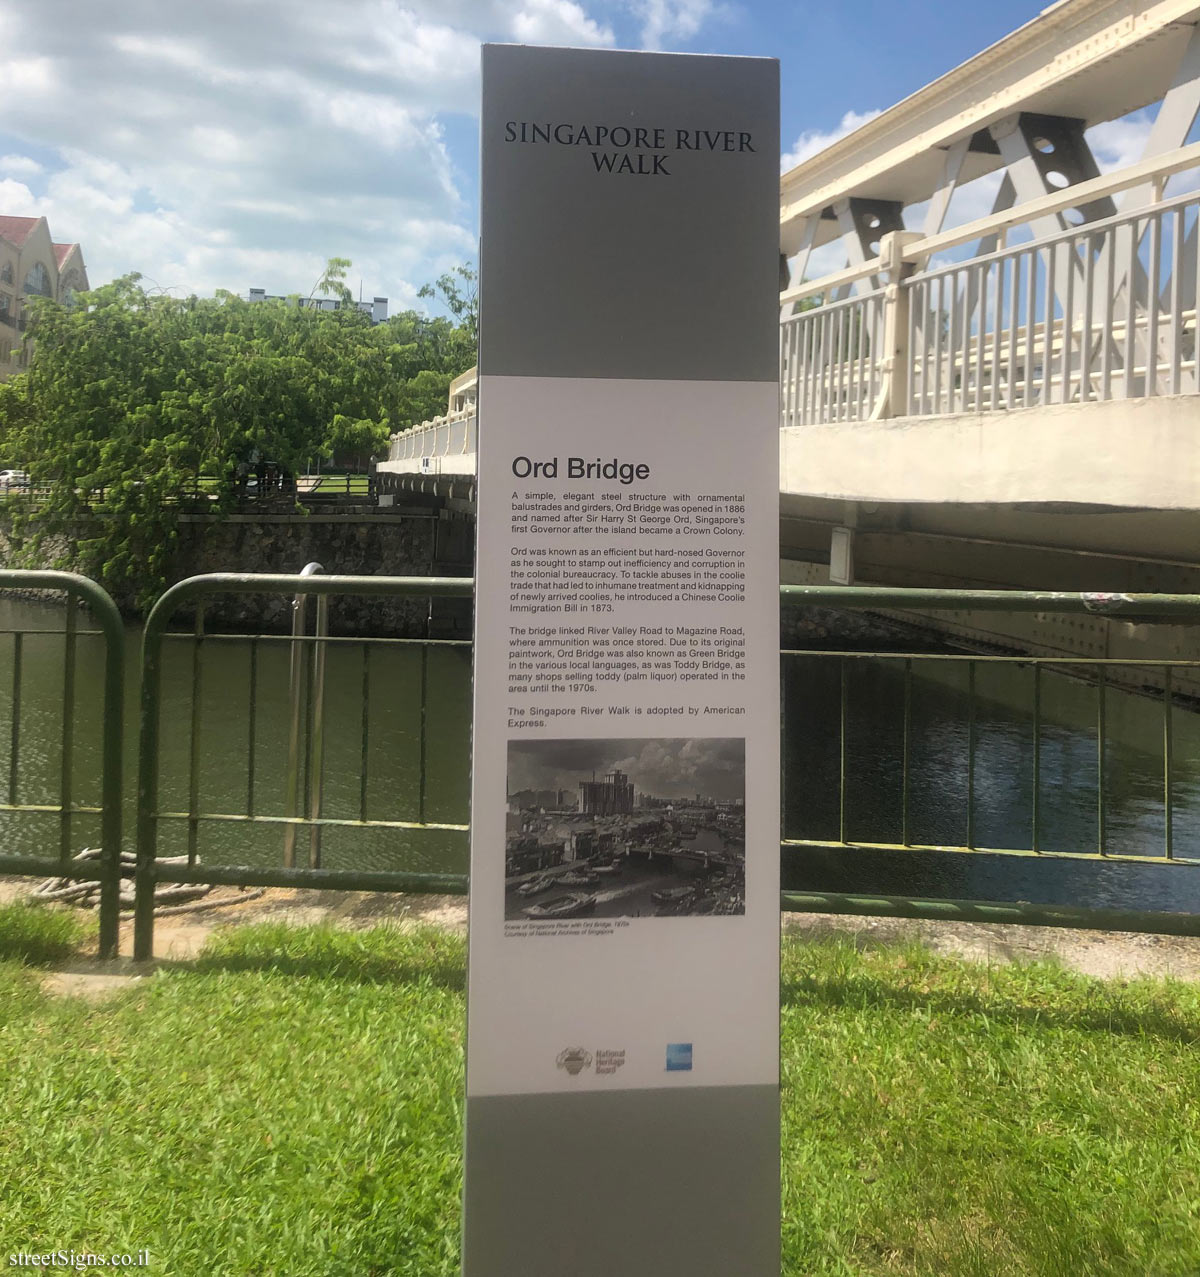 Singapore - The river walk - Ord Bridge